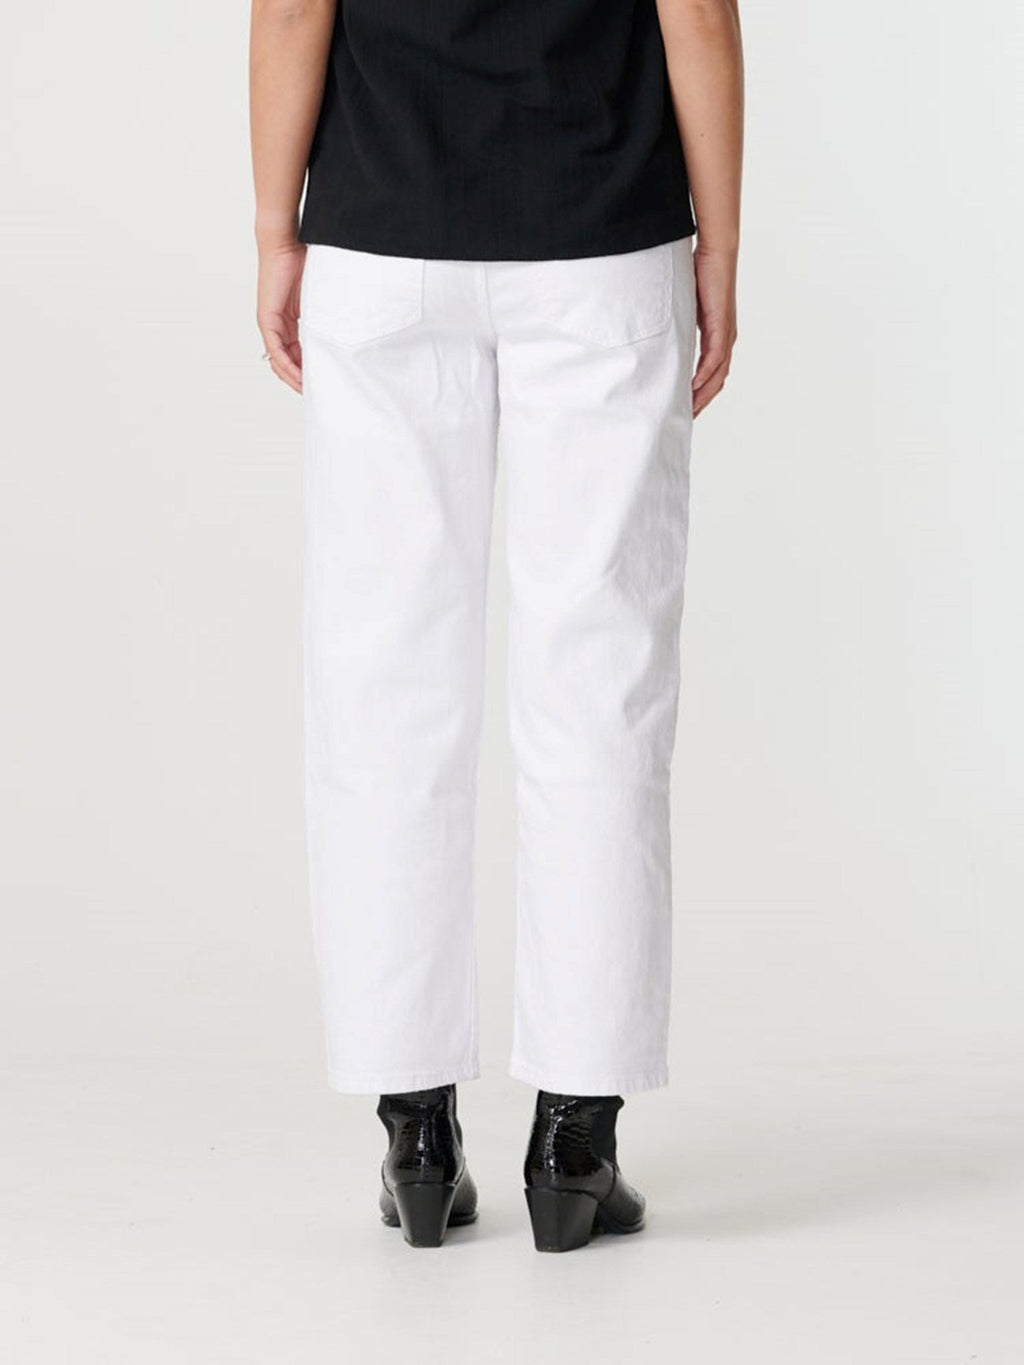 Brede jeans met hoge taille - wit